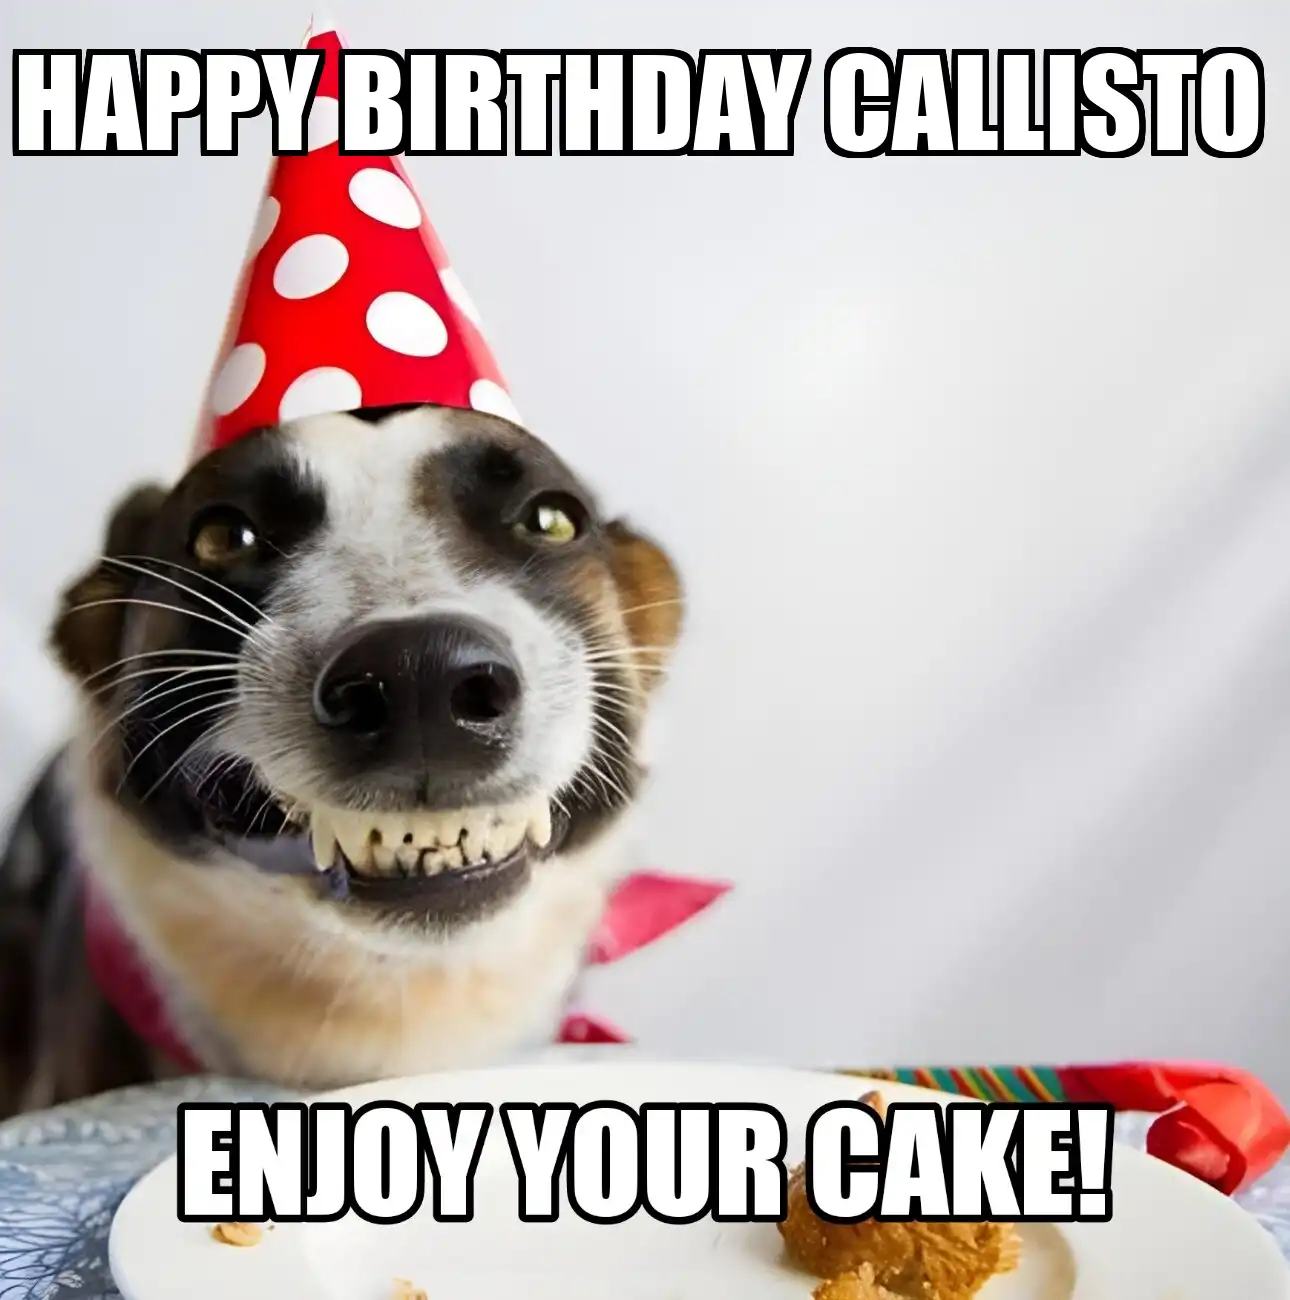 Happy Birthday Callisto Enjoy Your Cake Dog Meme